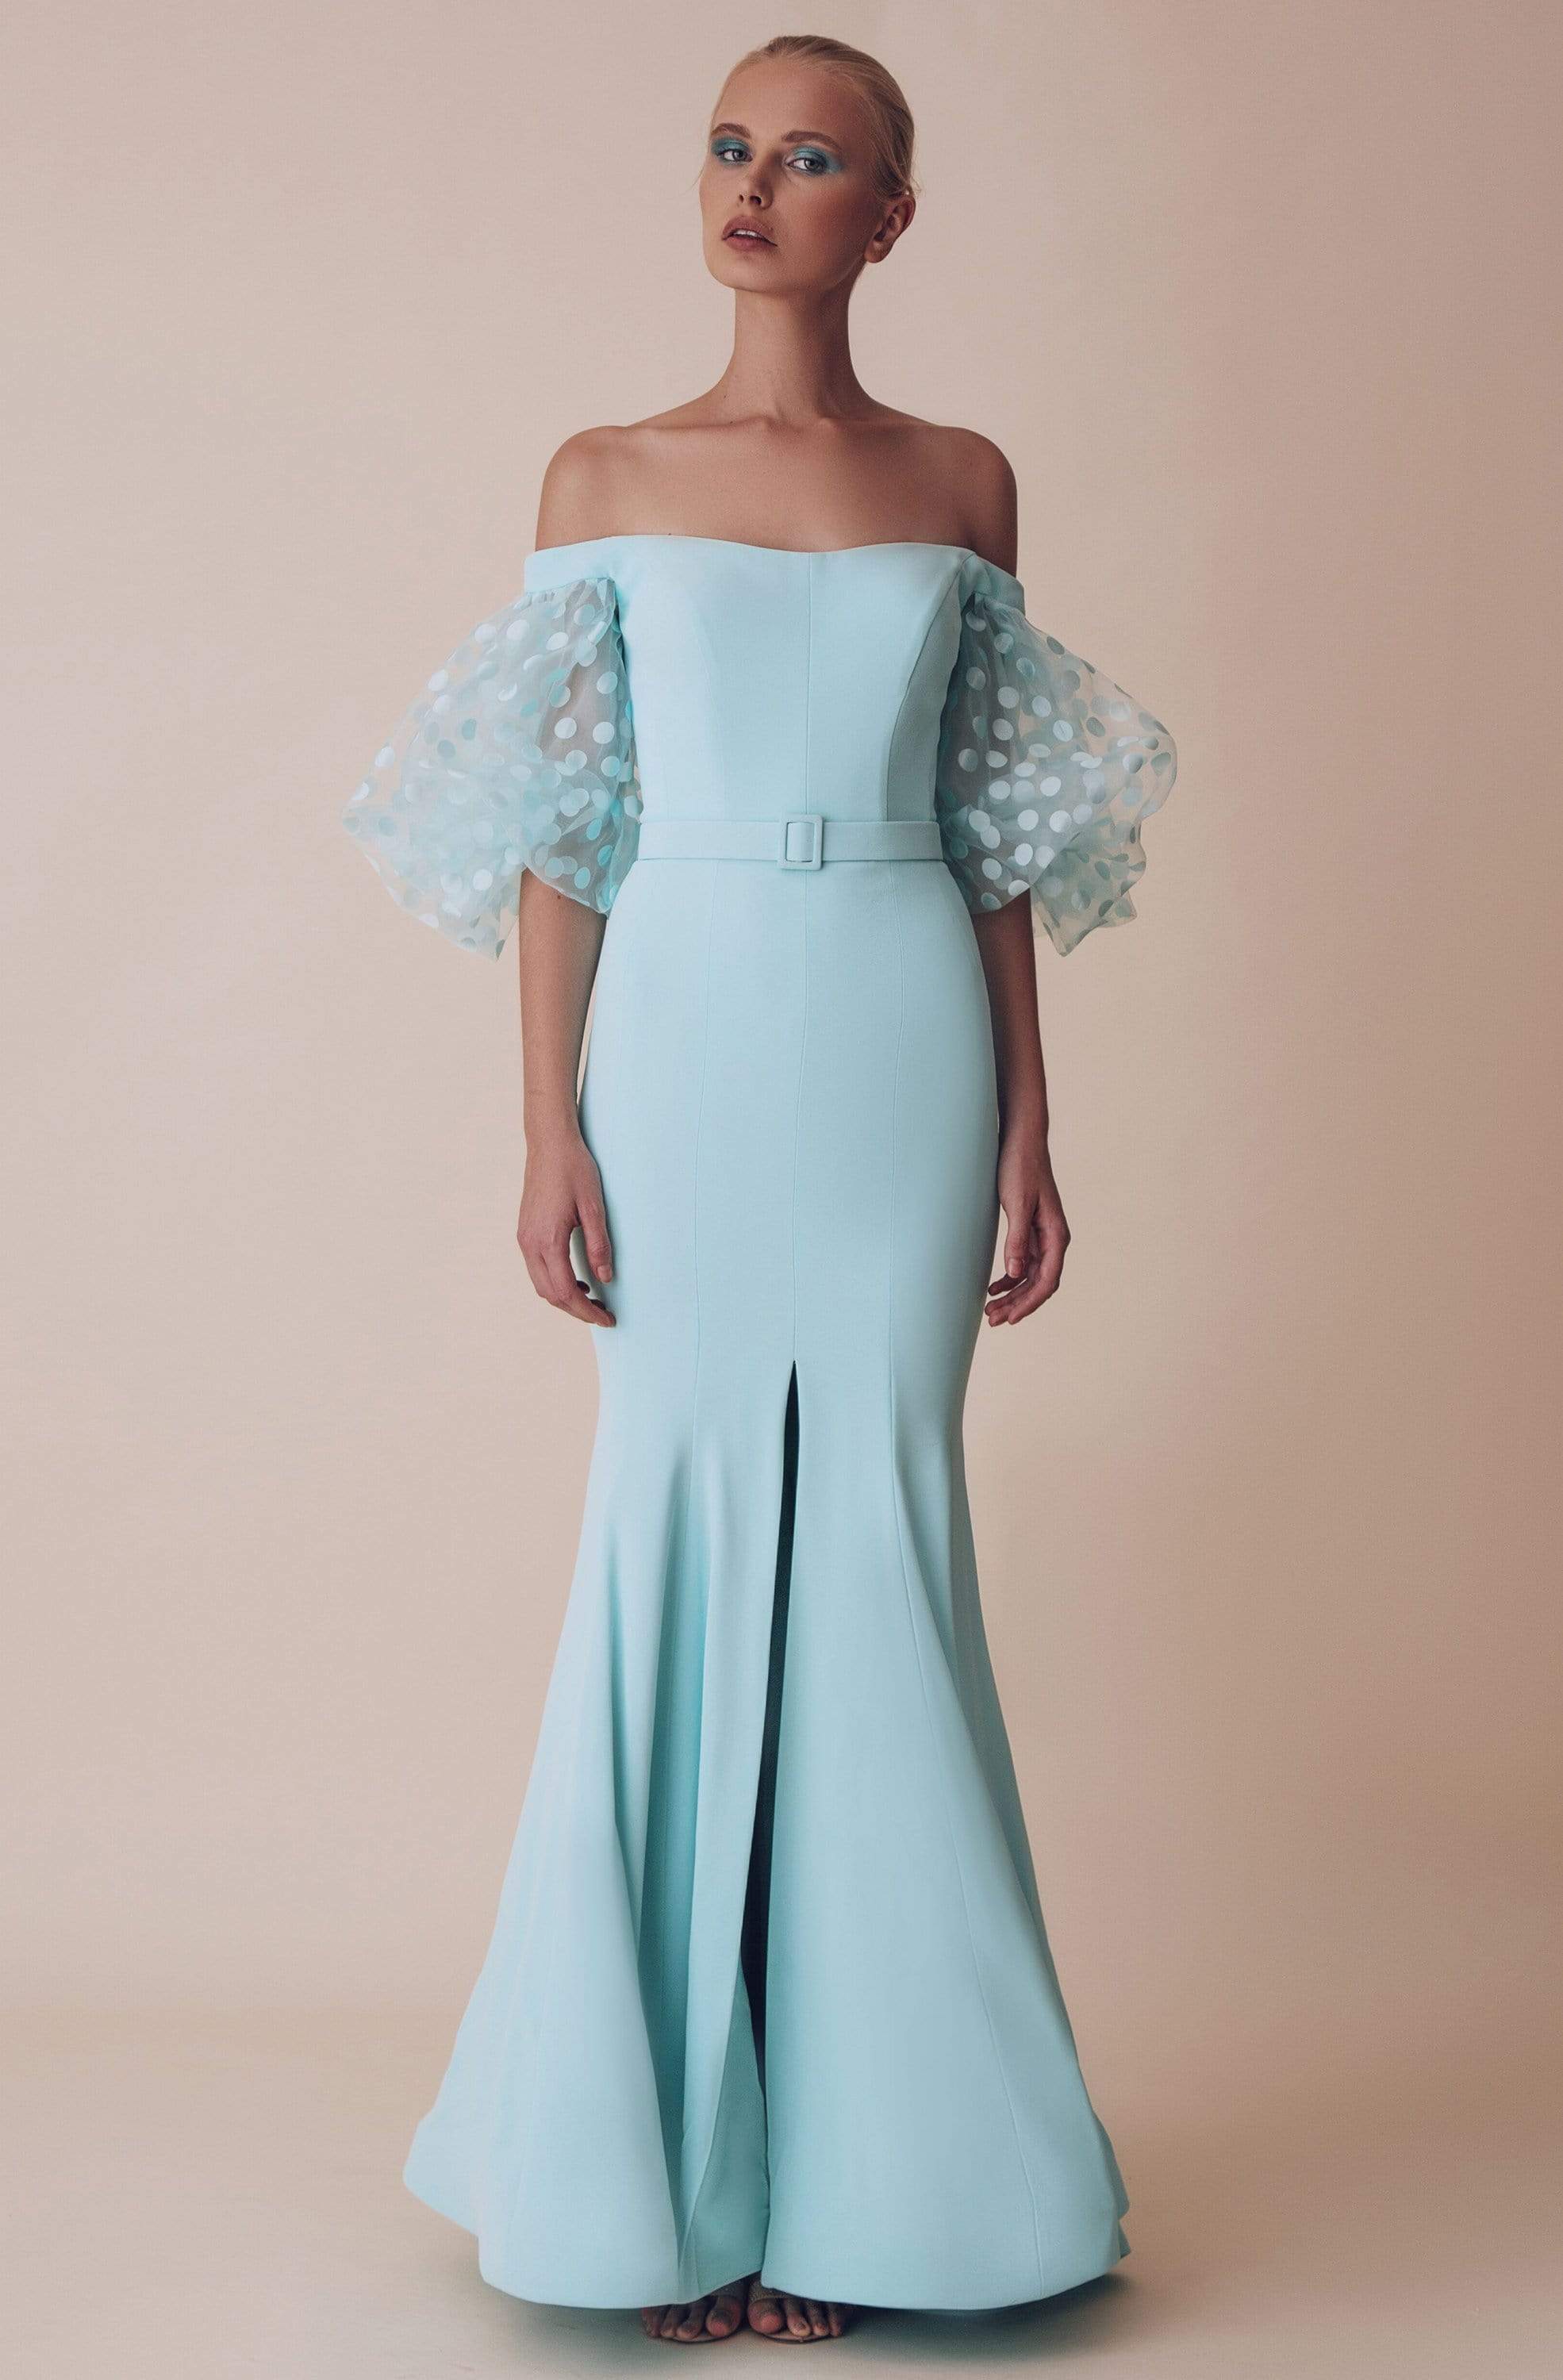 Gatti Nolli Couture - OP-5022 Trumpet Silhouette Evening Gown
